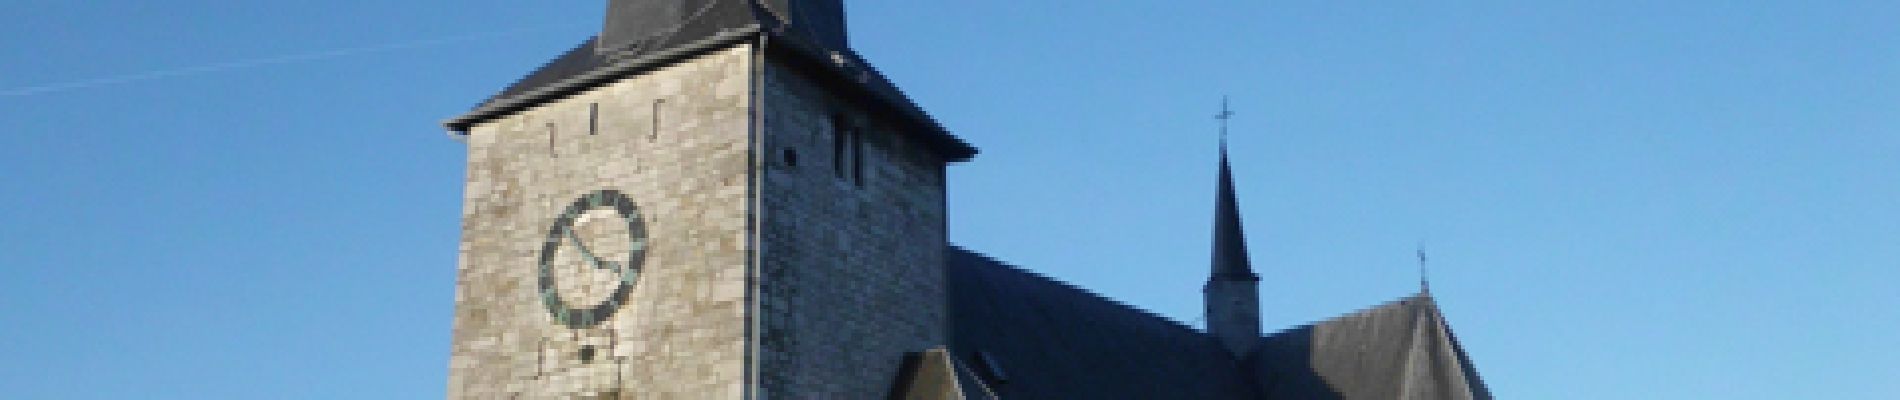 POI Limburg - L'église Saint-Lambert - Photo